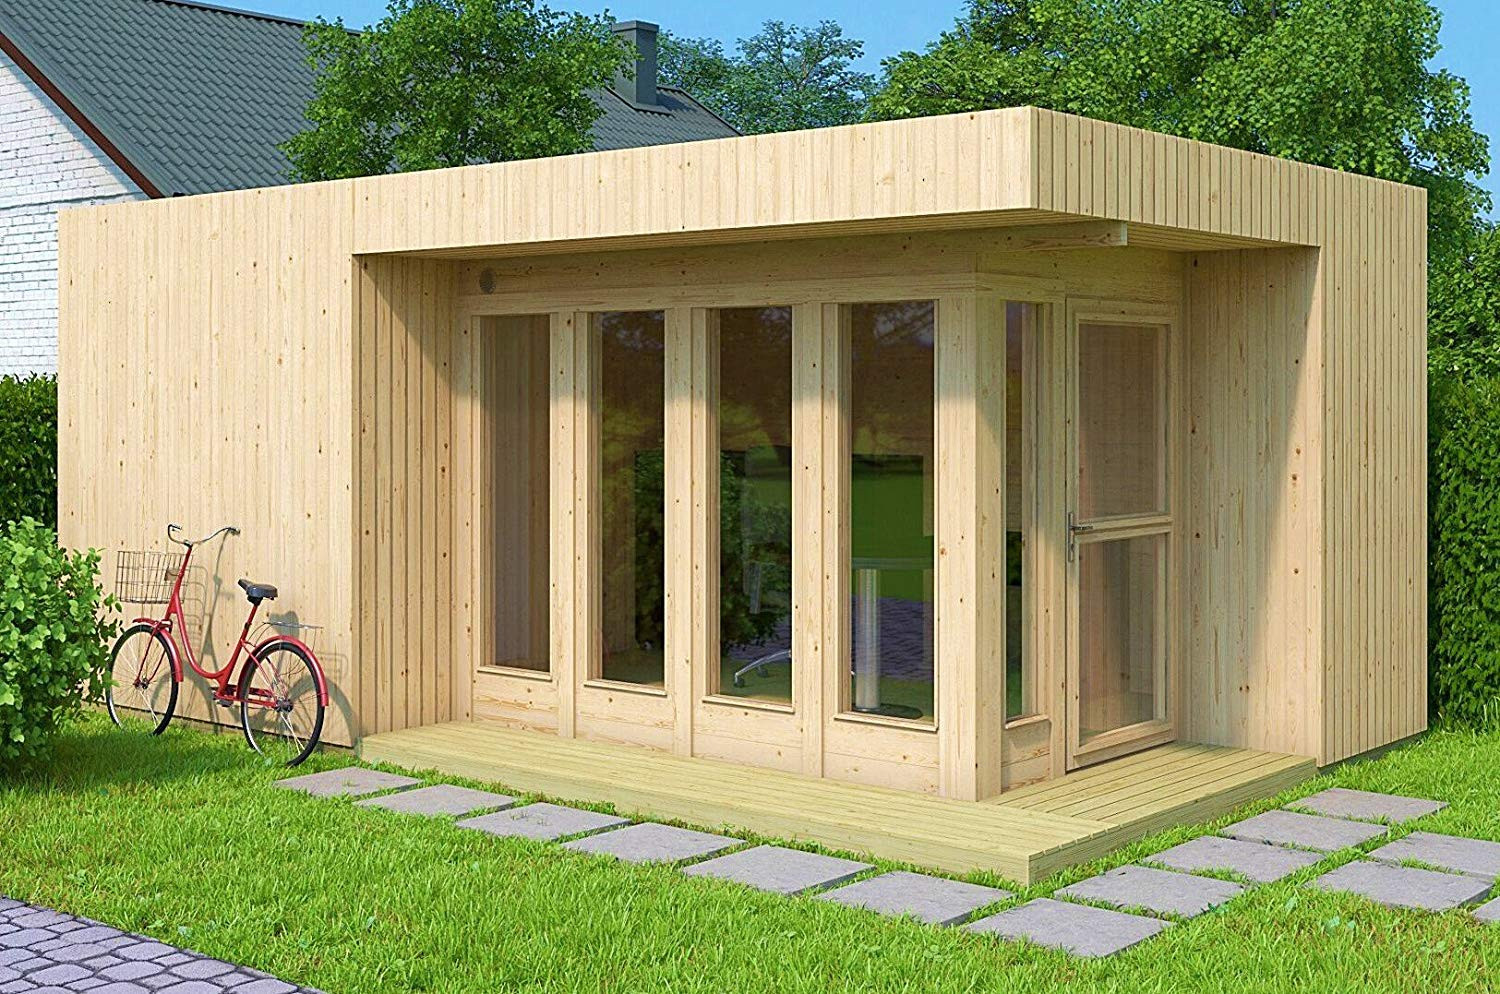 DIY Home Kit
 Amazon sells a DIY tiny house kit you can build yourself